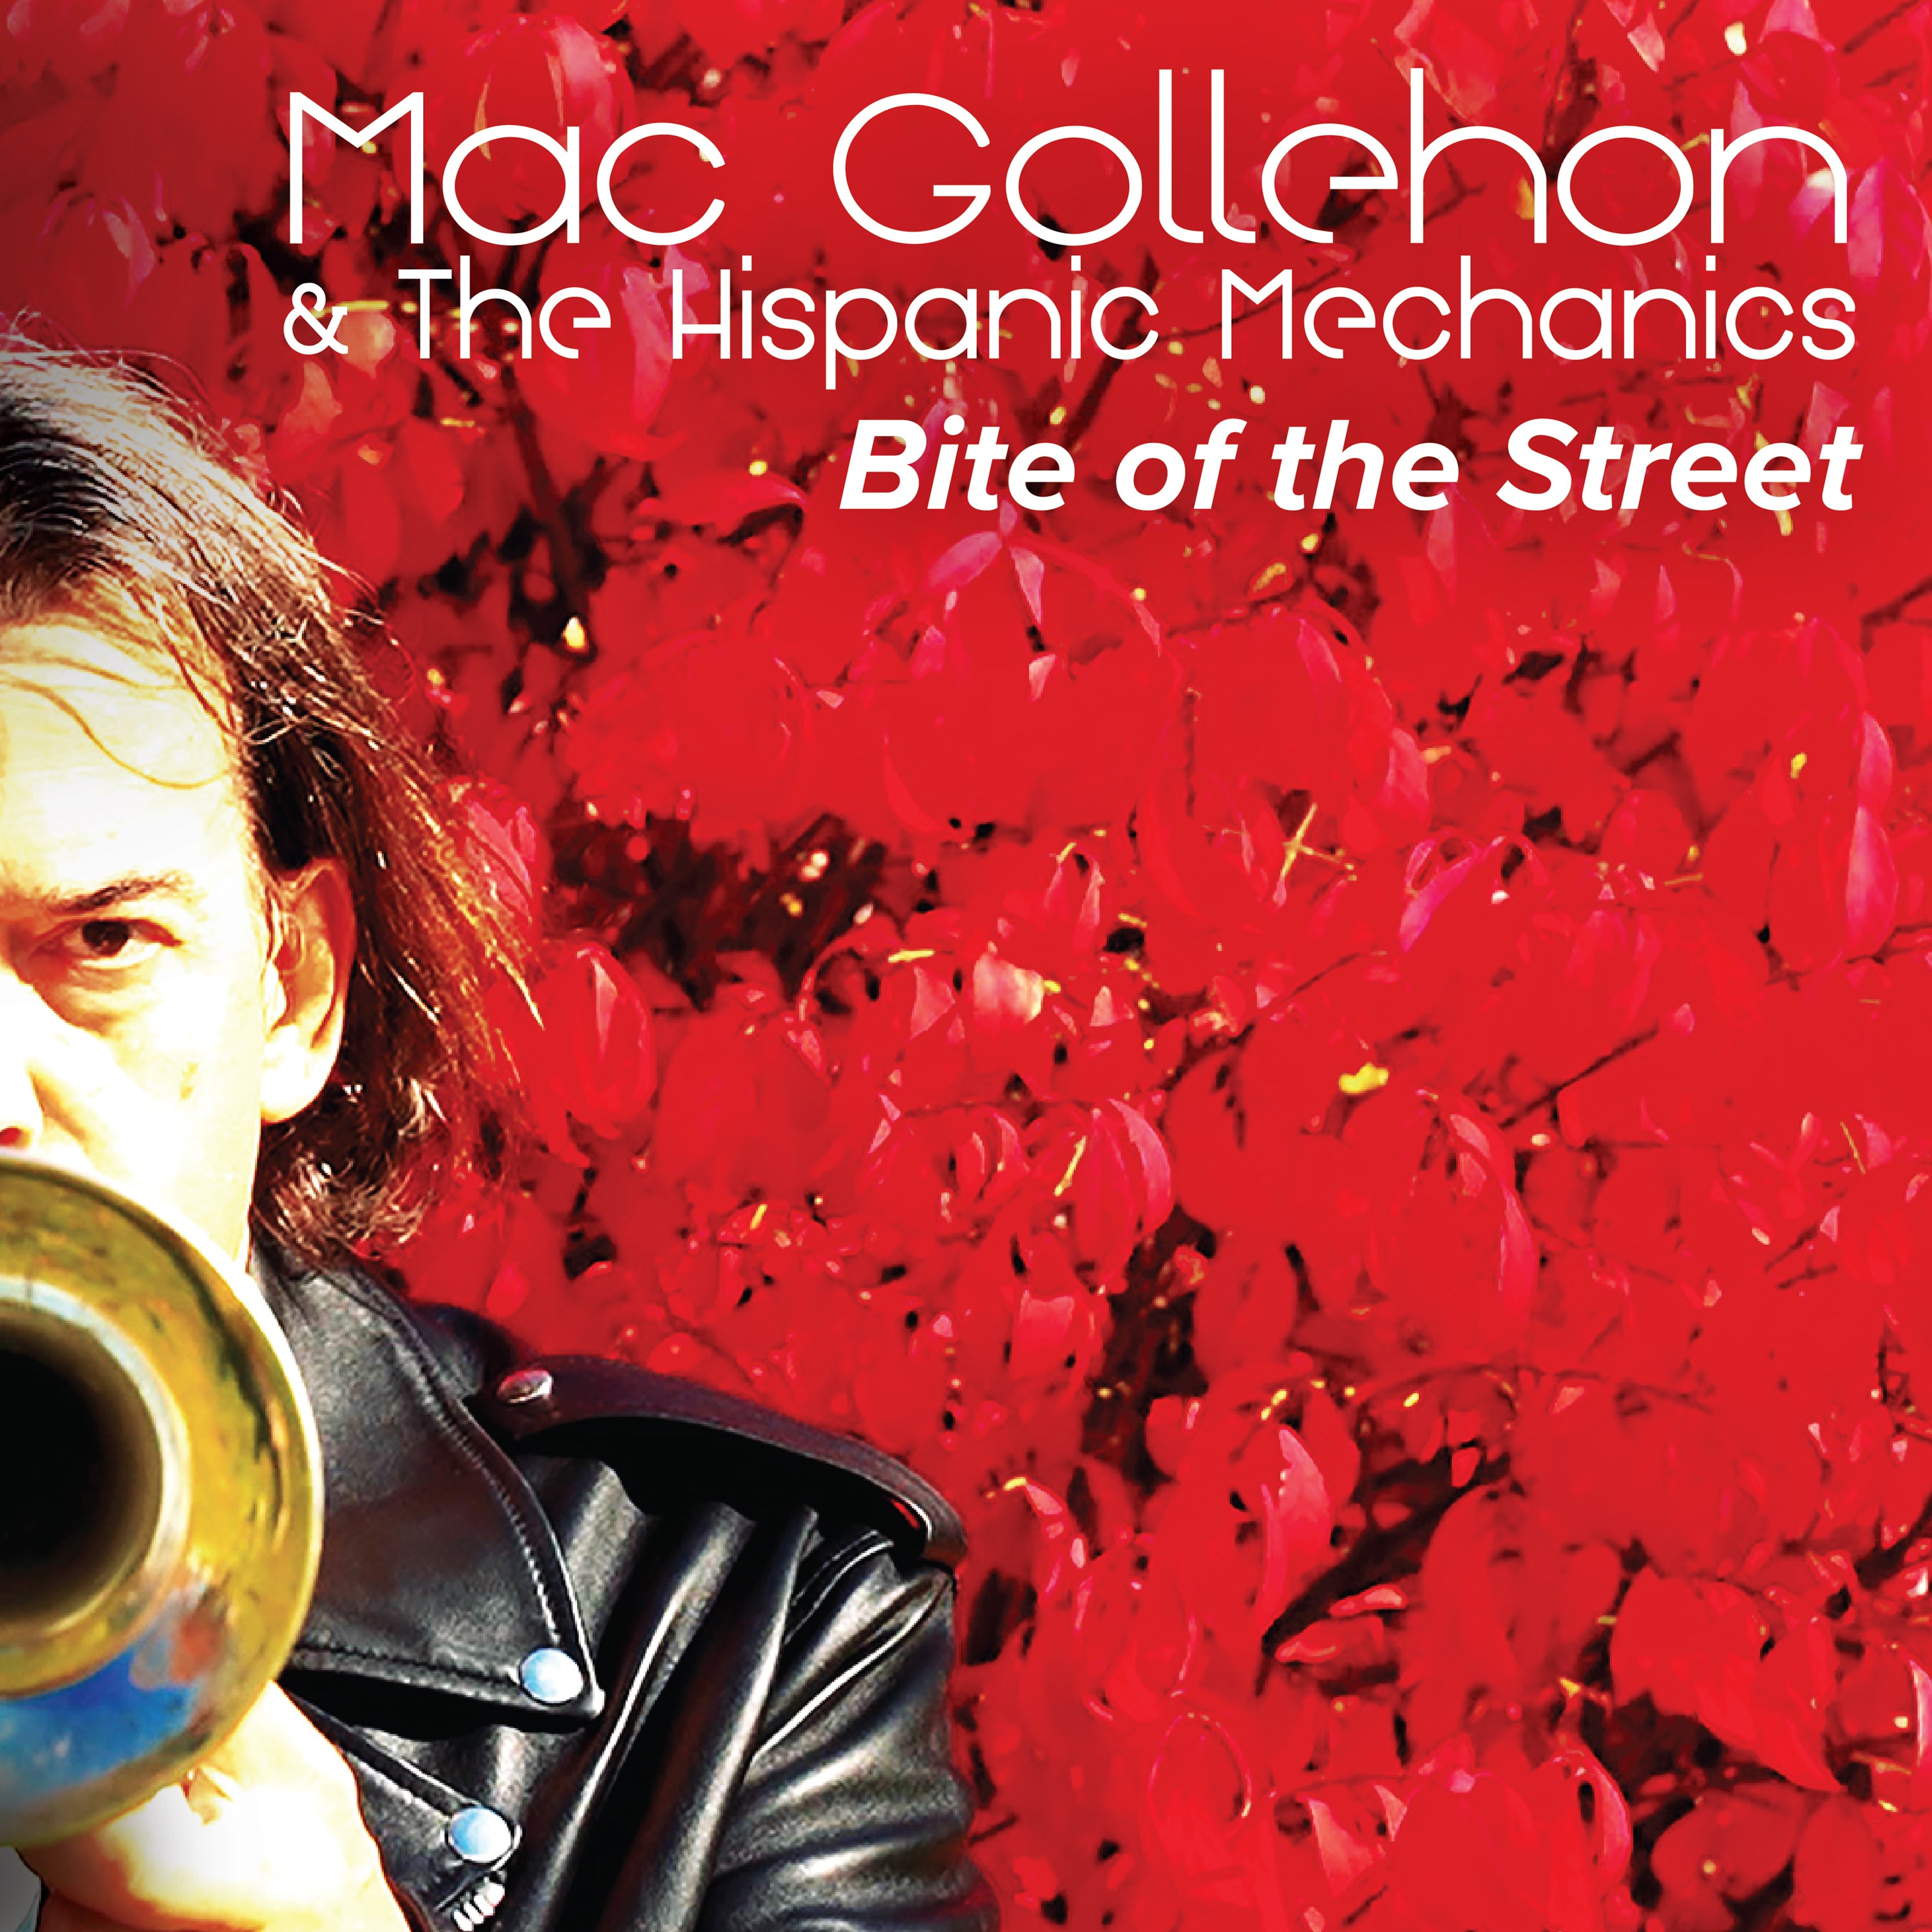 MAC GOLLEHON & THE HISPANIC MECHANICS - Bite of the Street